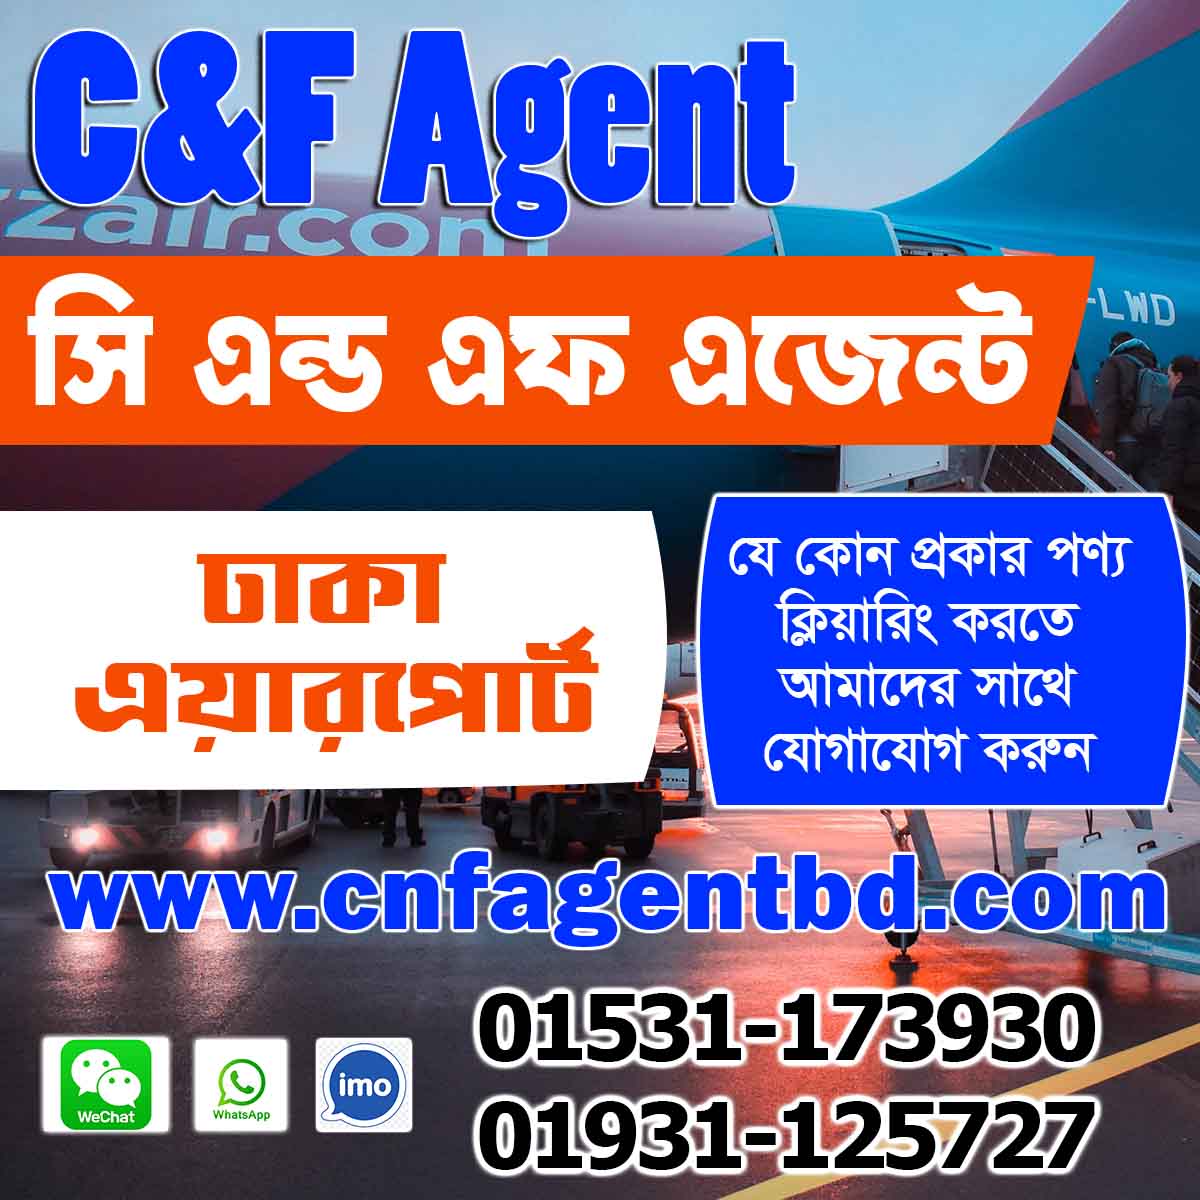 C&F Agent Bangladesh